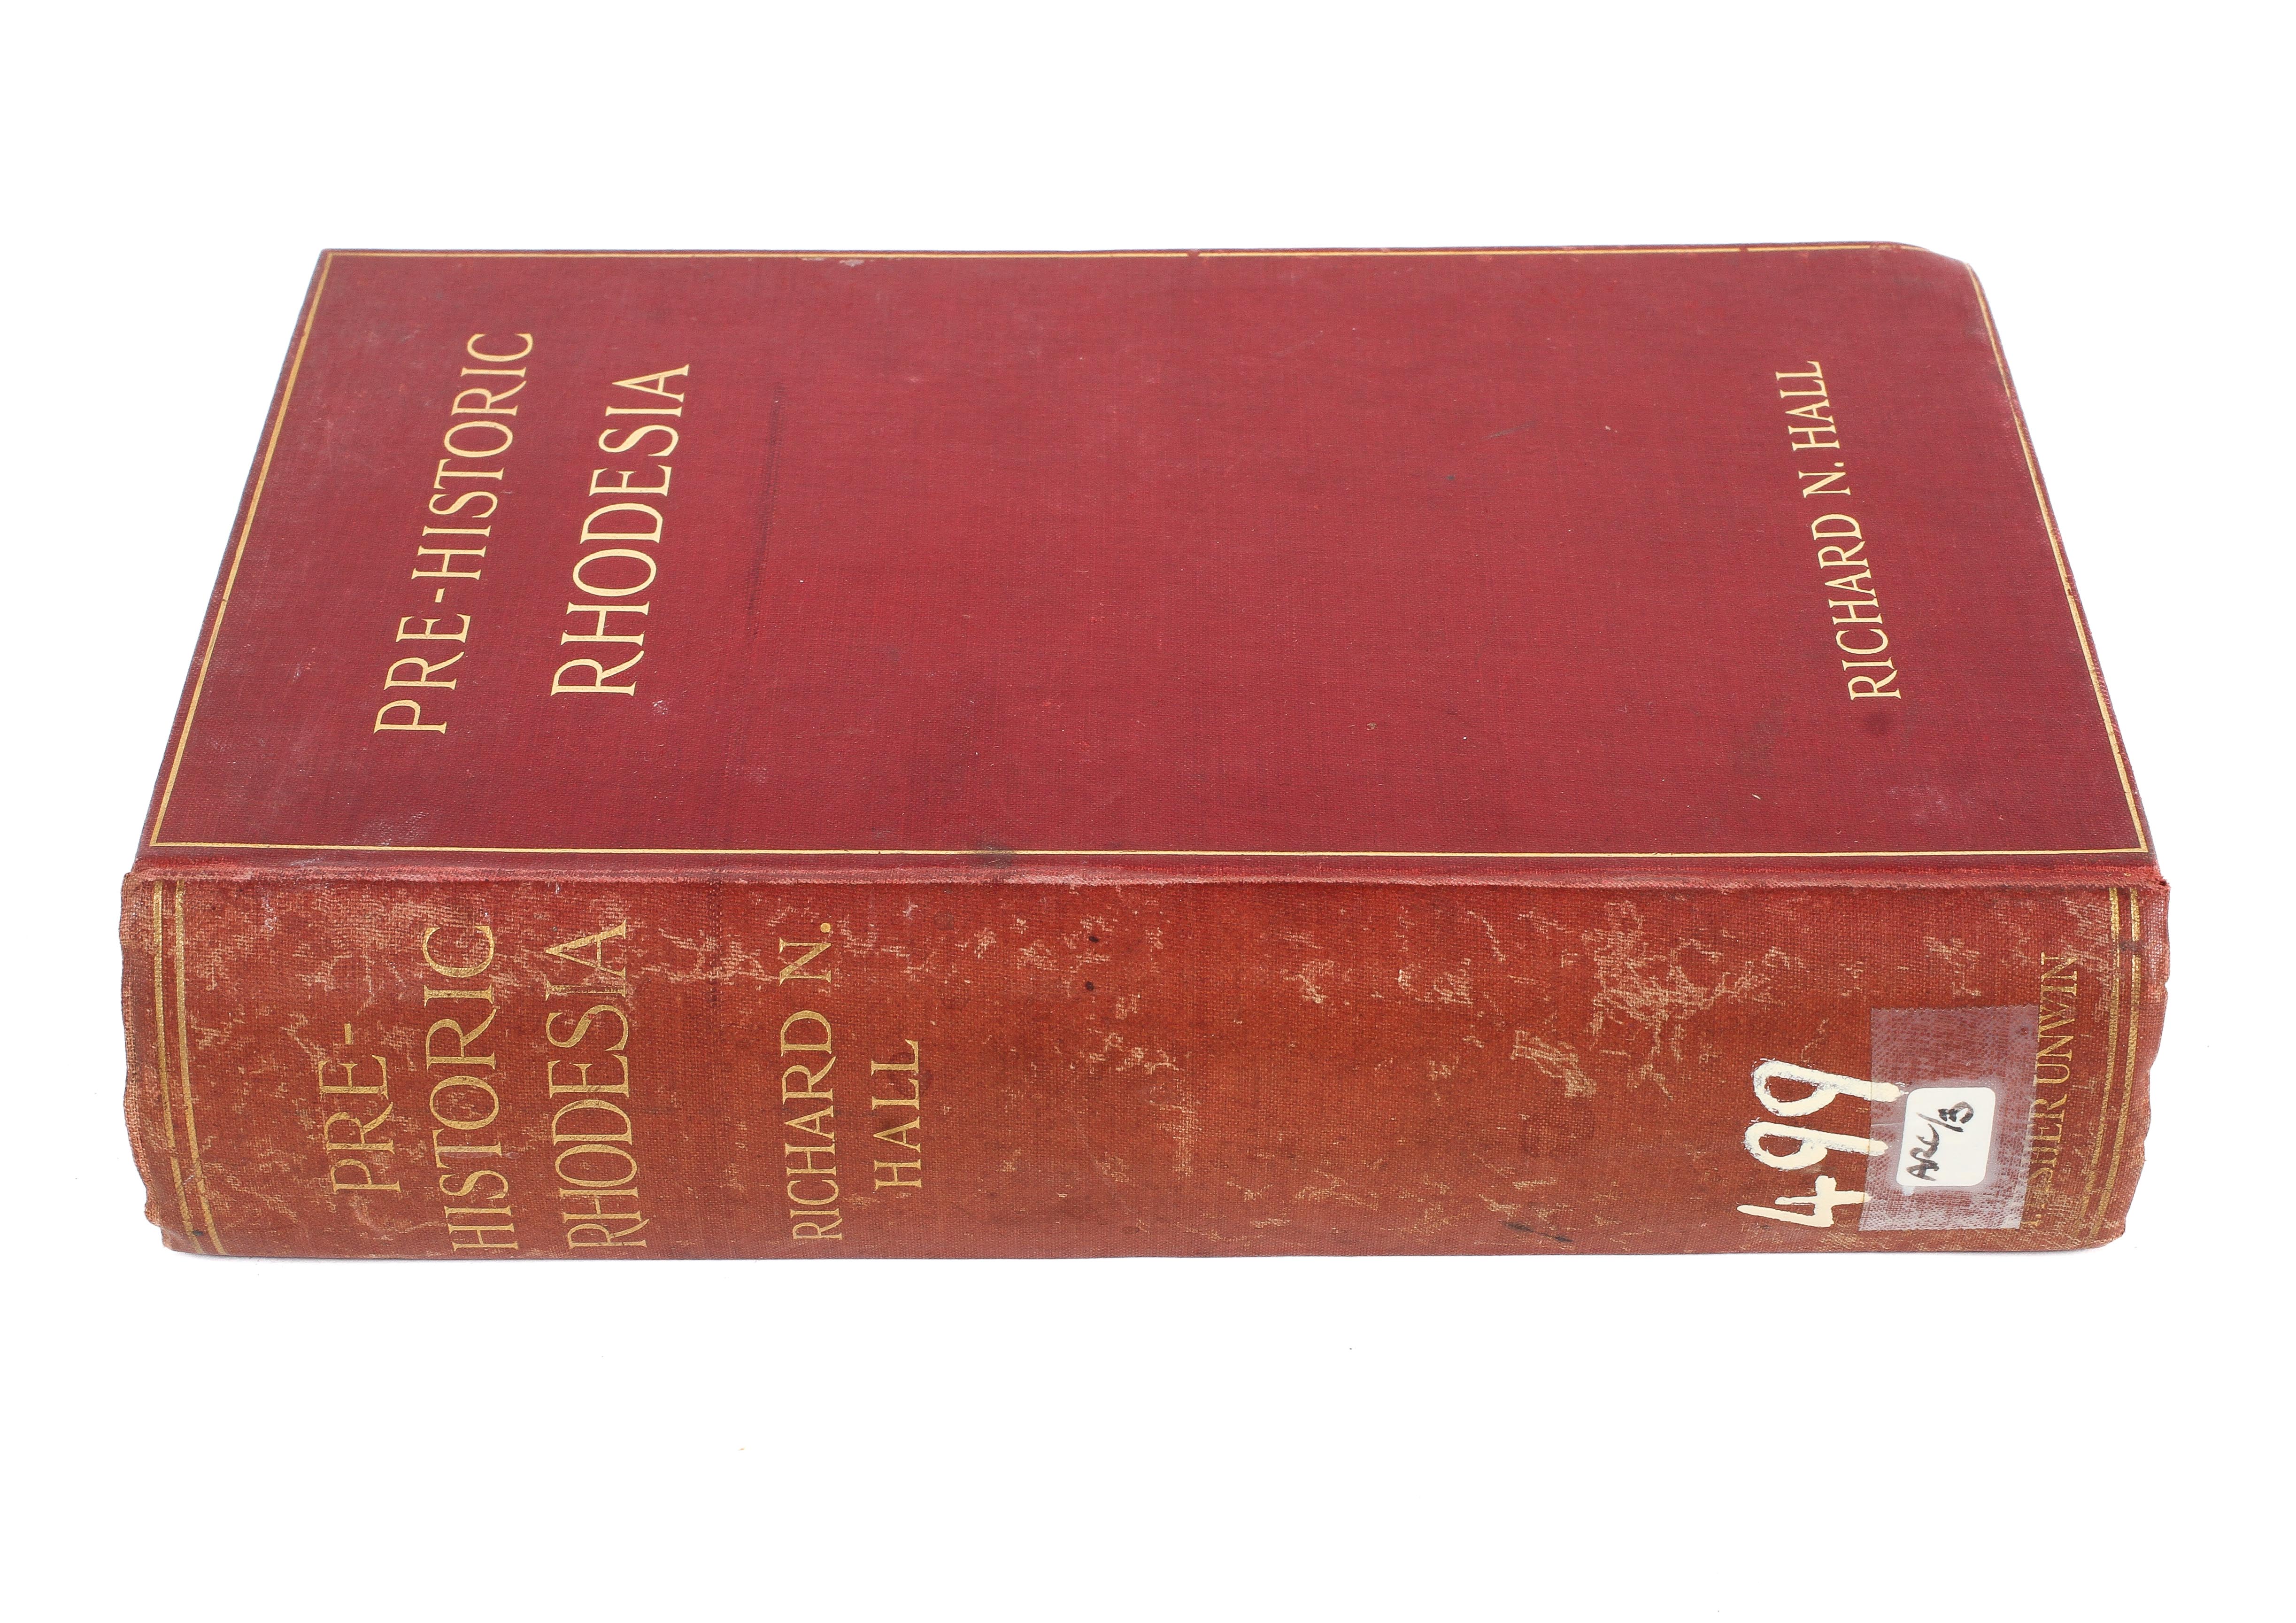 One volume: Richard N Hall, Pre-Historic Rhodesia, T. Fisher Unwin, London, 1909.